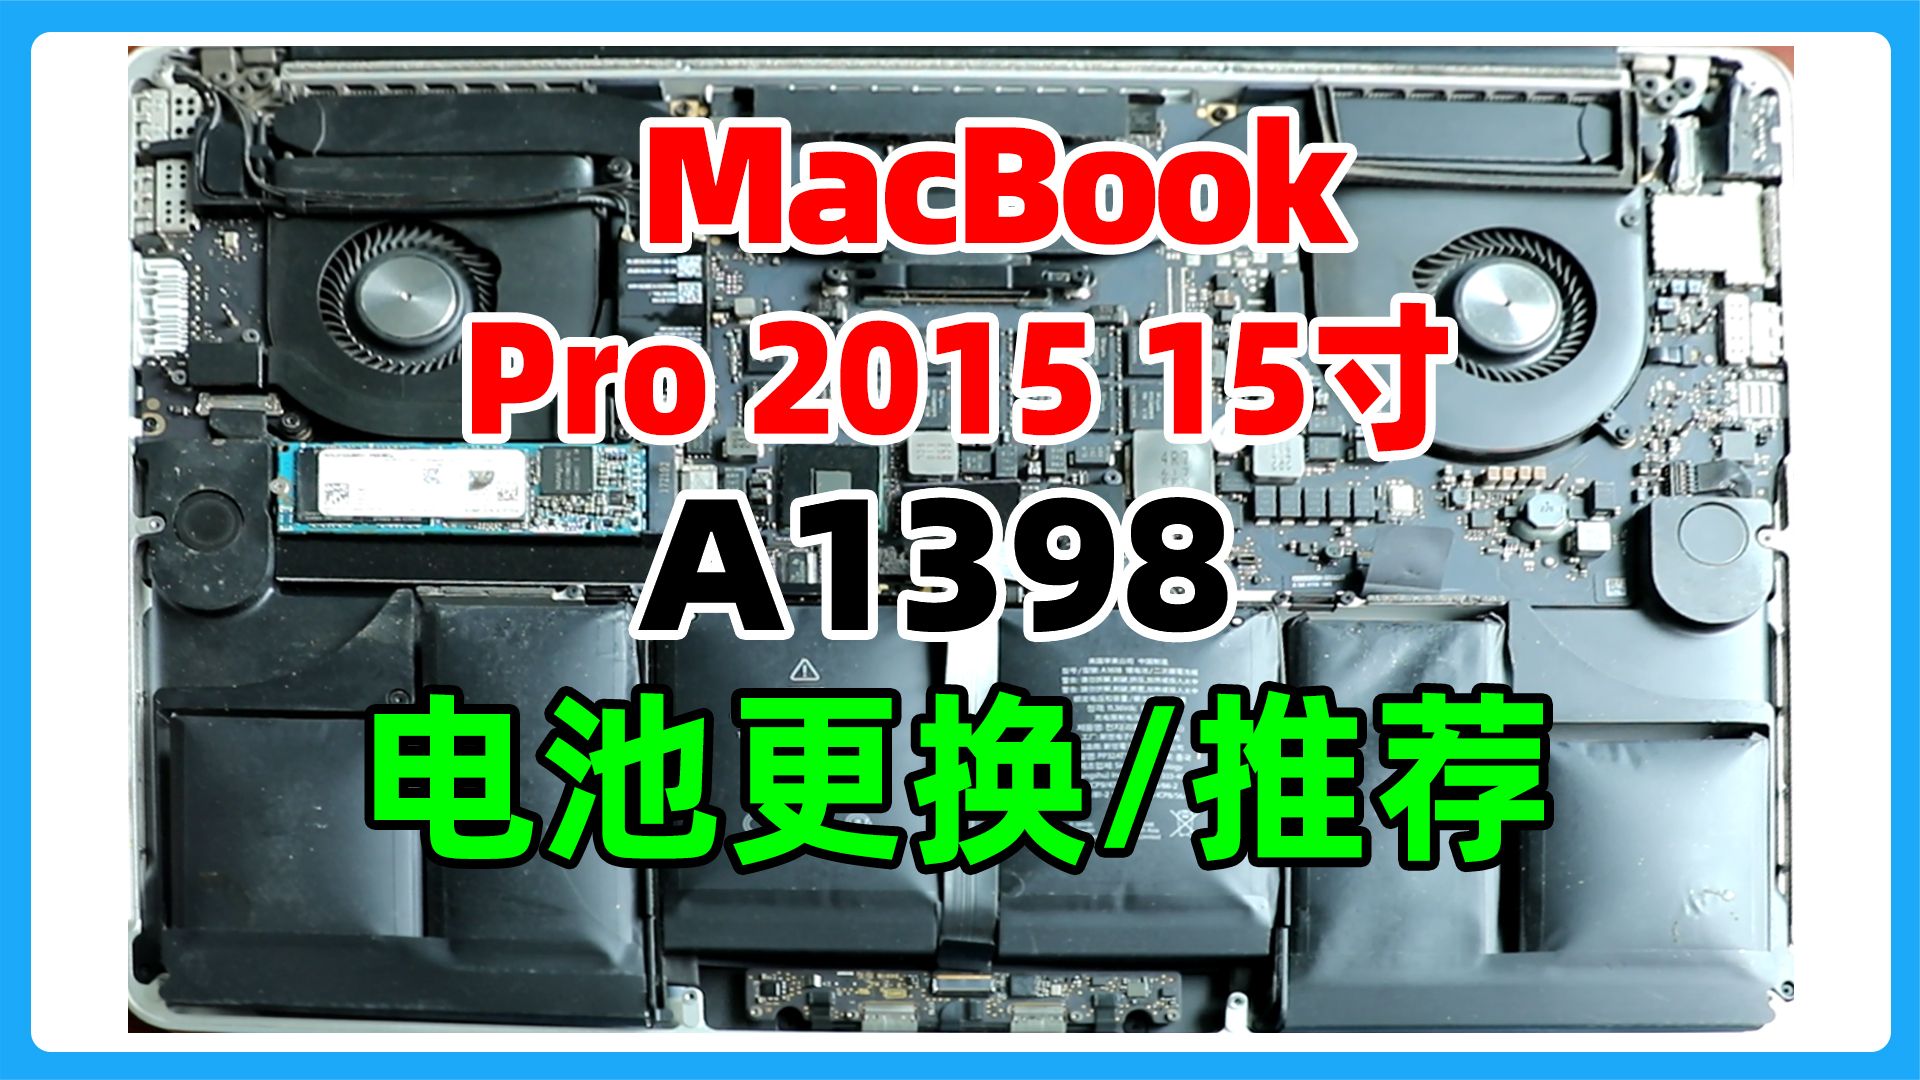 MacBook Pro 2015 15寸 A1398电池更换教程，原装电池鼓包，电脑无法开机反复重启，更换新电池解决。